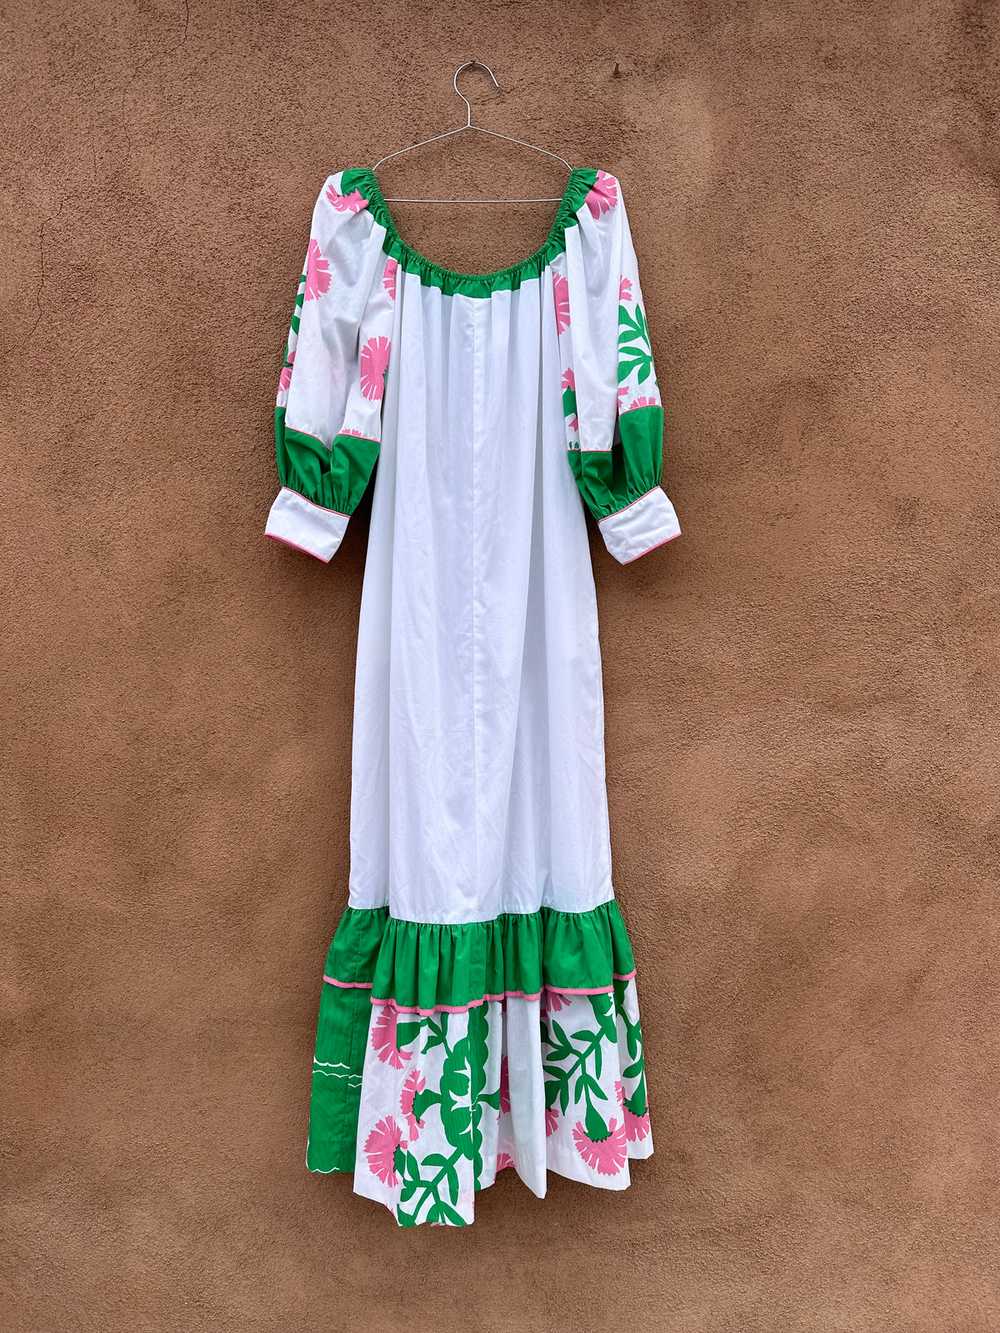 1970's Mango Howell Dress - Made in Hawaii - image 5